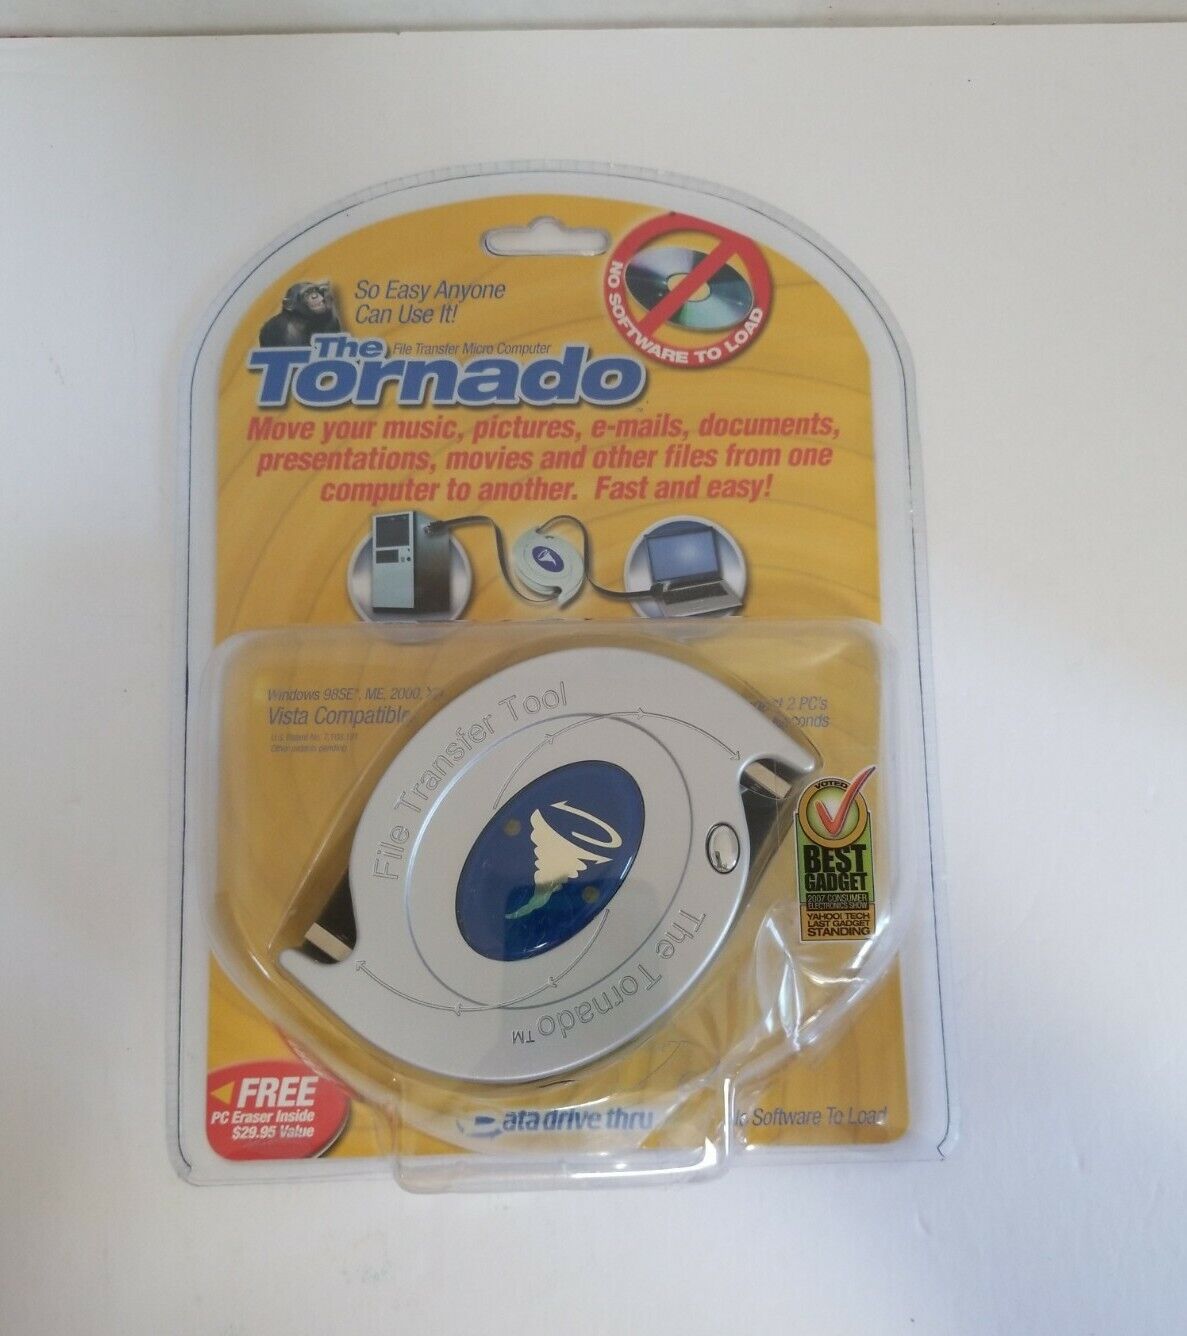 The Tornado File Transfer Micro Computer Tool- Data Drive Thur.- USB 2.0 or 1.1 